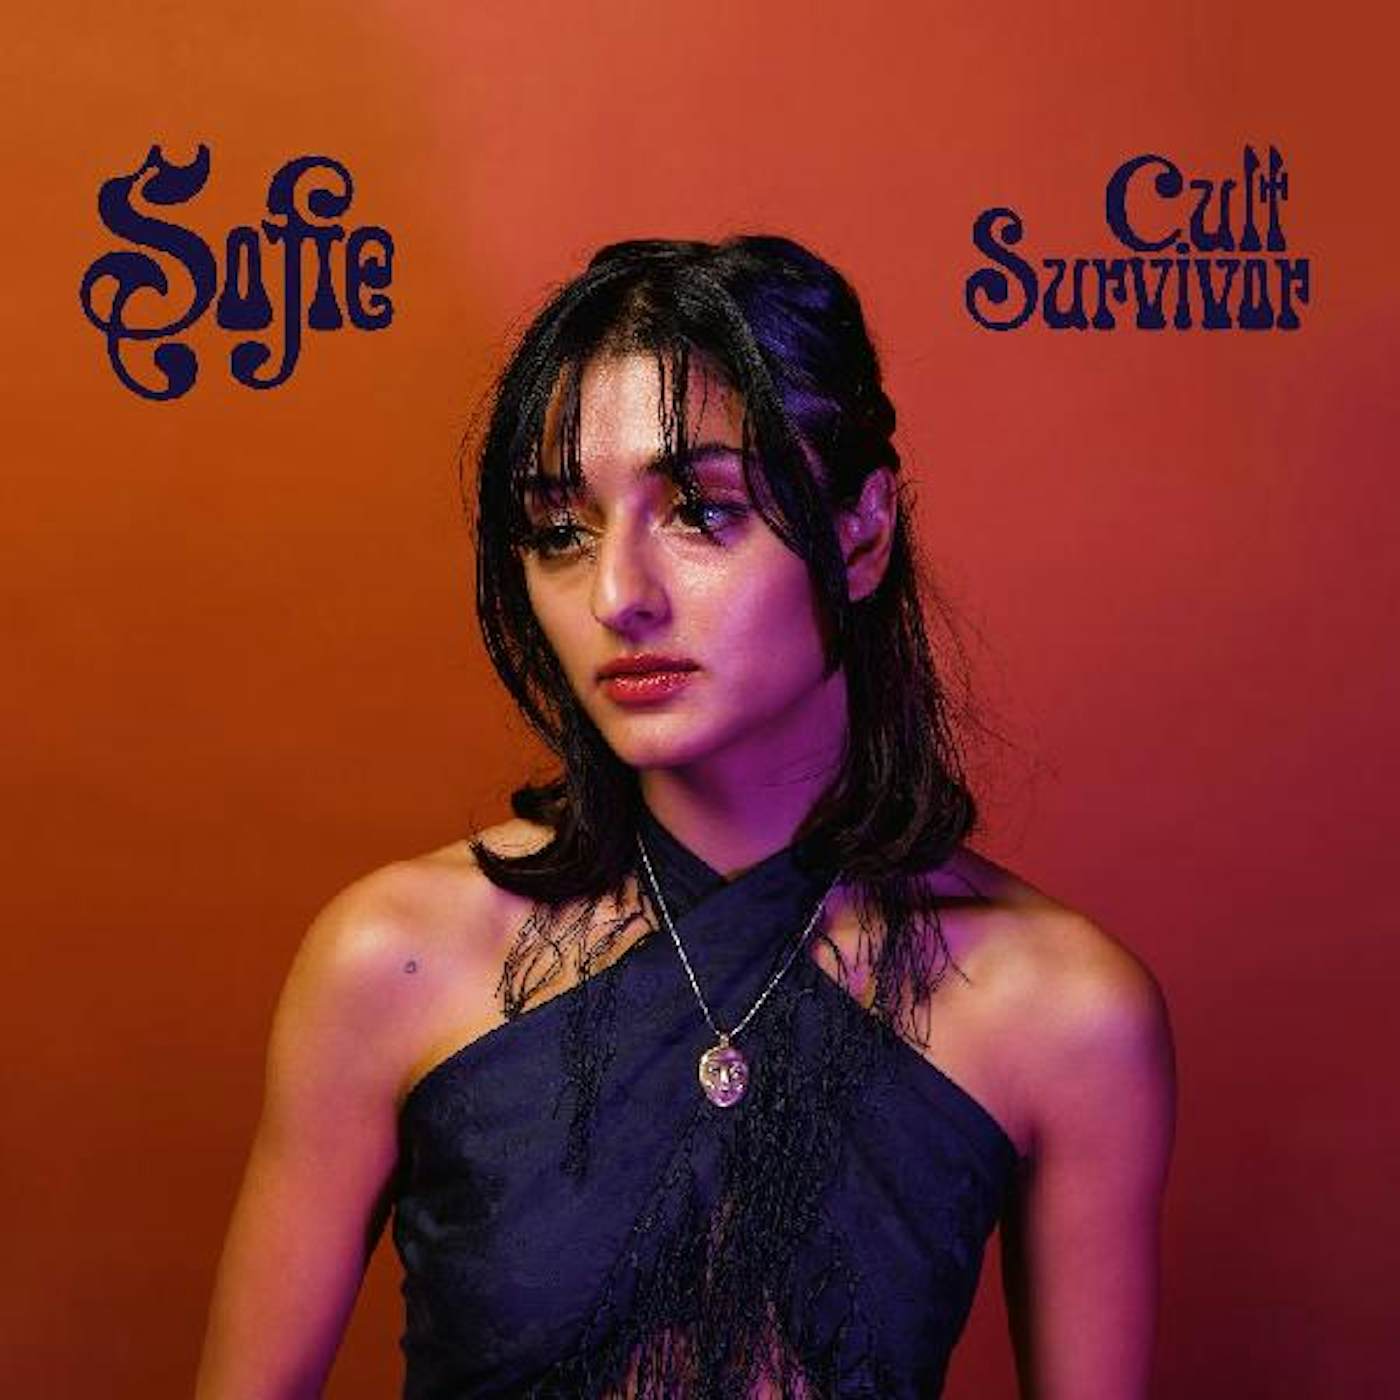 Sofie CULT SURVIVOR CD